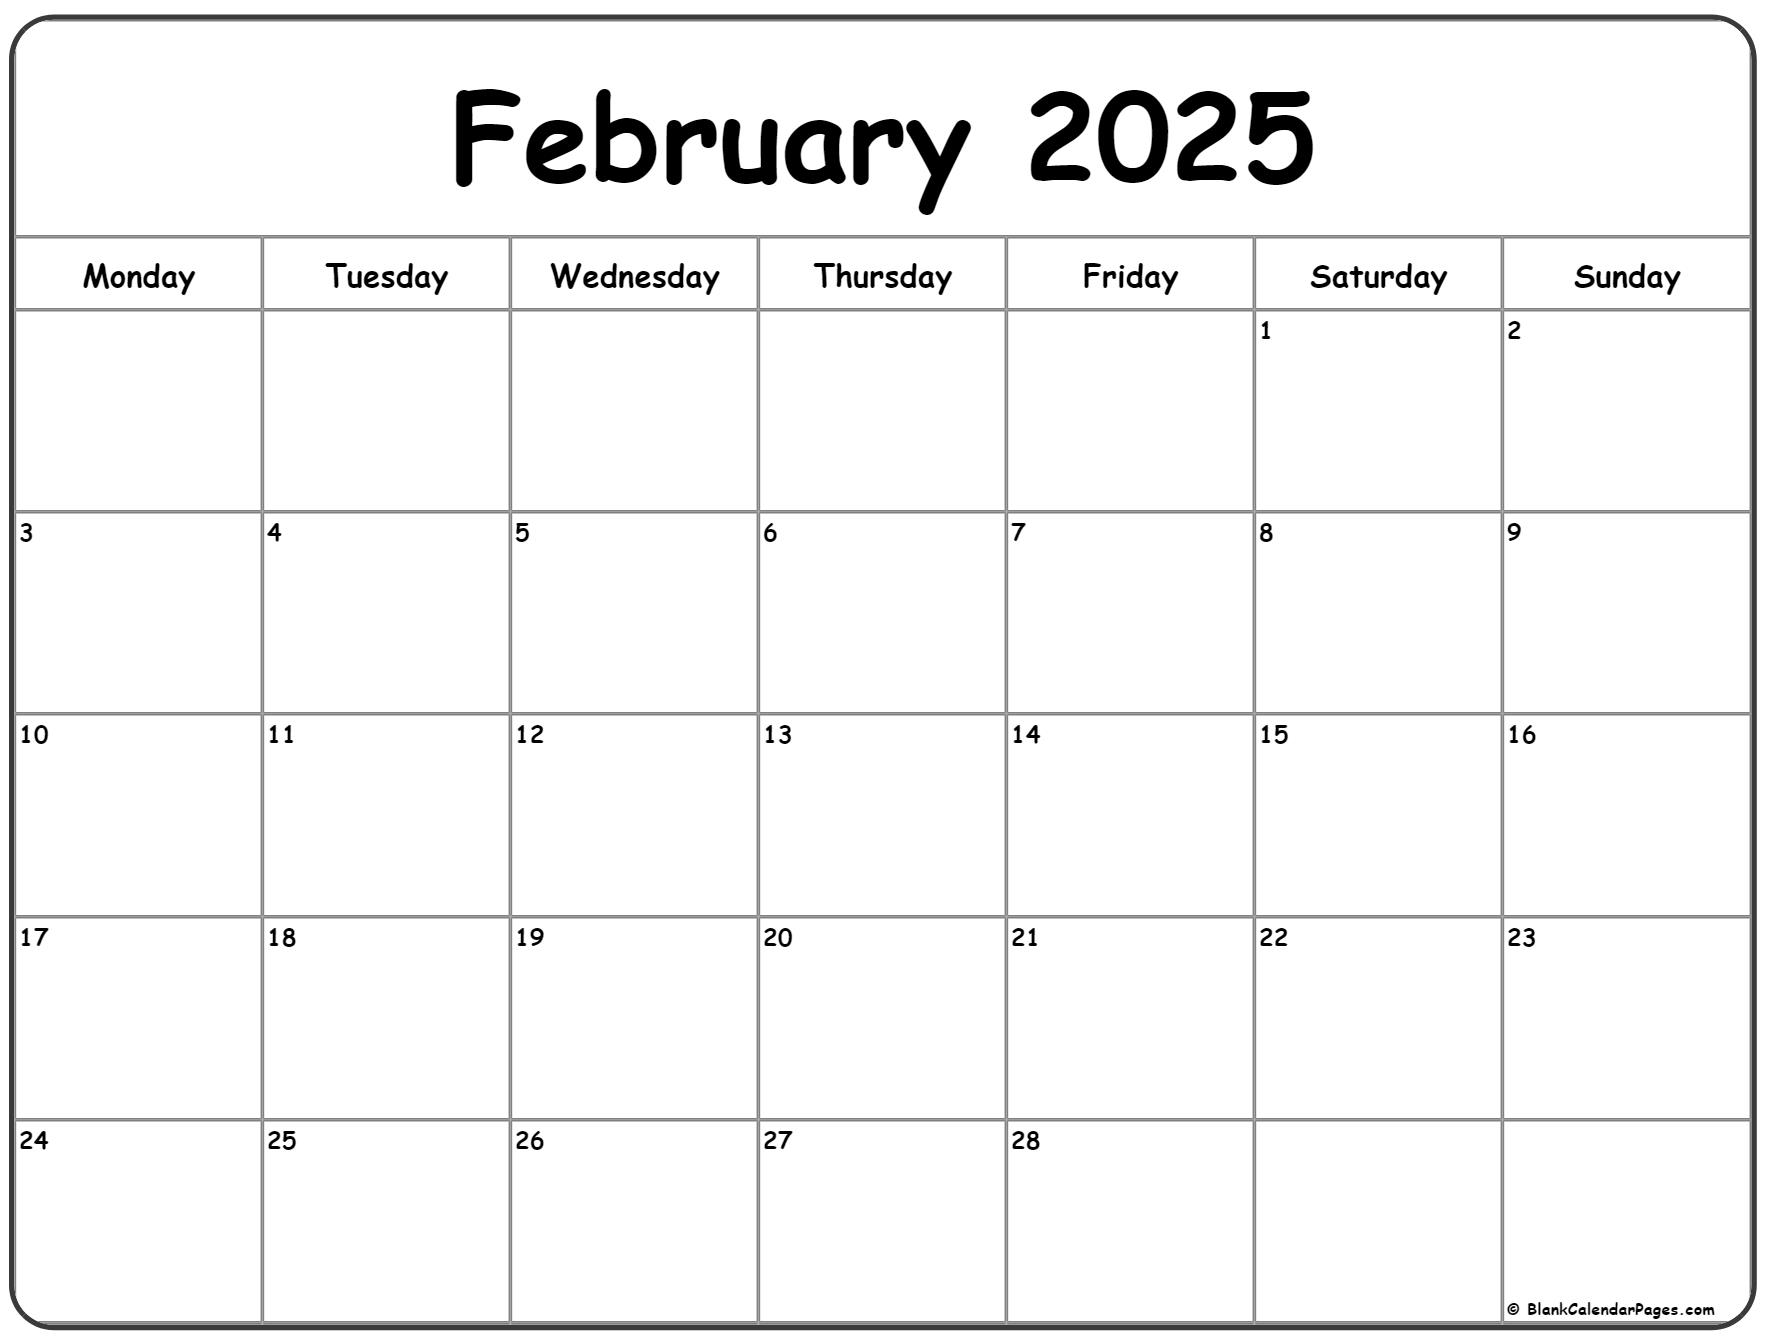 February 2025 Monday calendar. Monday to Sunday